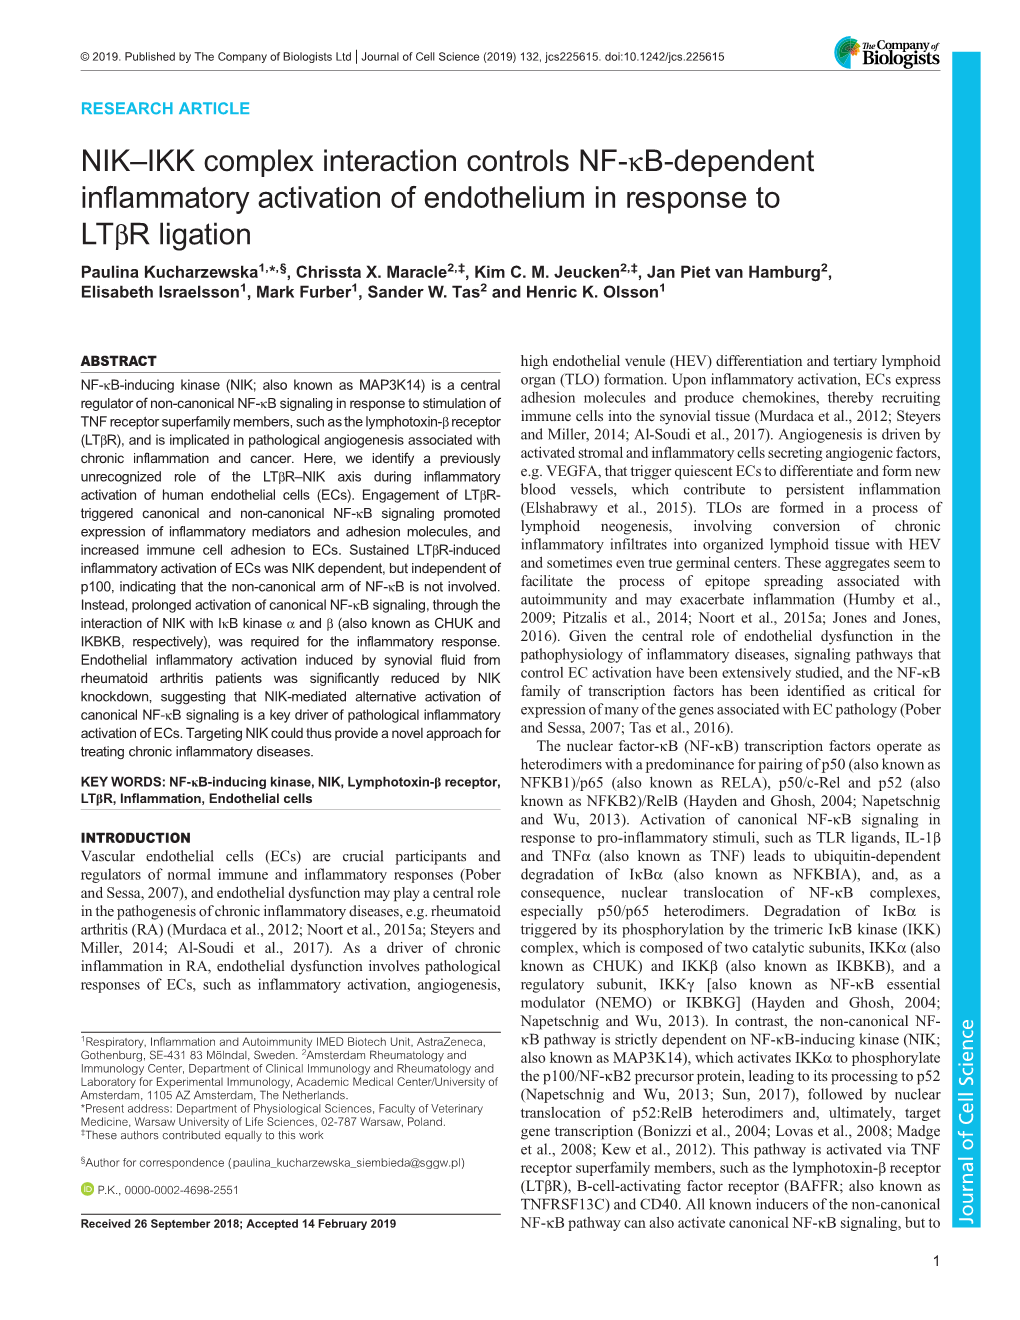 NIK–IKK Complex Interaction Controls NF-Κb-Dependent Inflammatory Activation of Endothelium in Response to Ltβr Ligation Paulina Kucharzewska1,*,§, Chrissta X